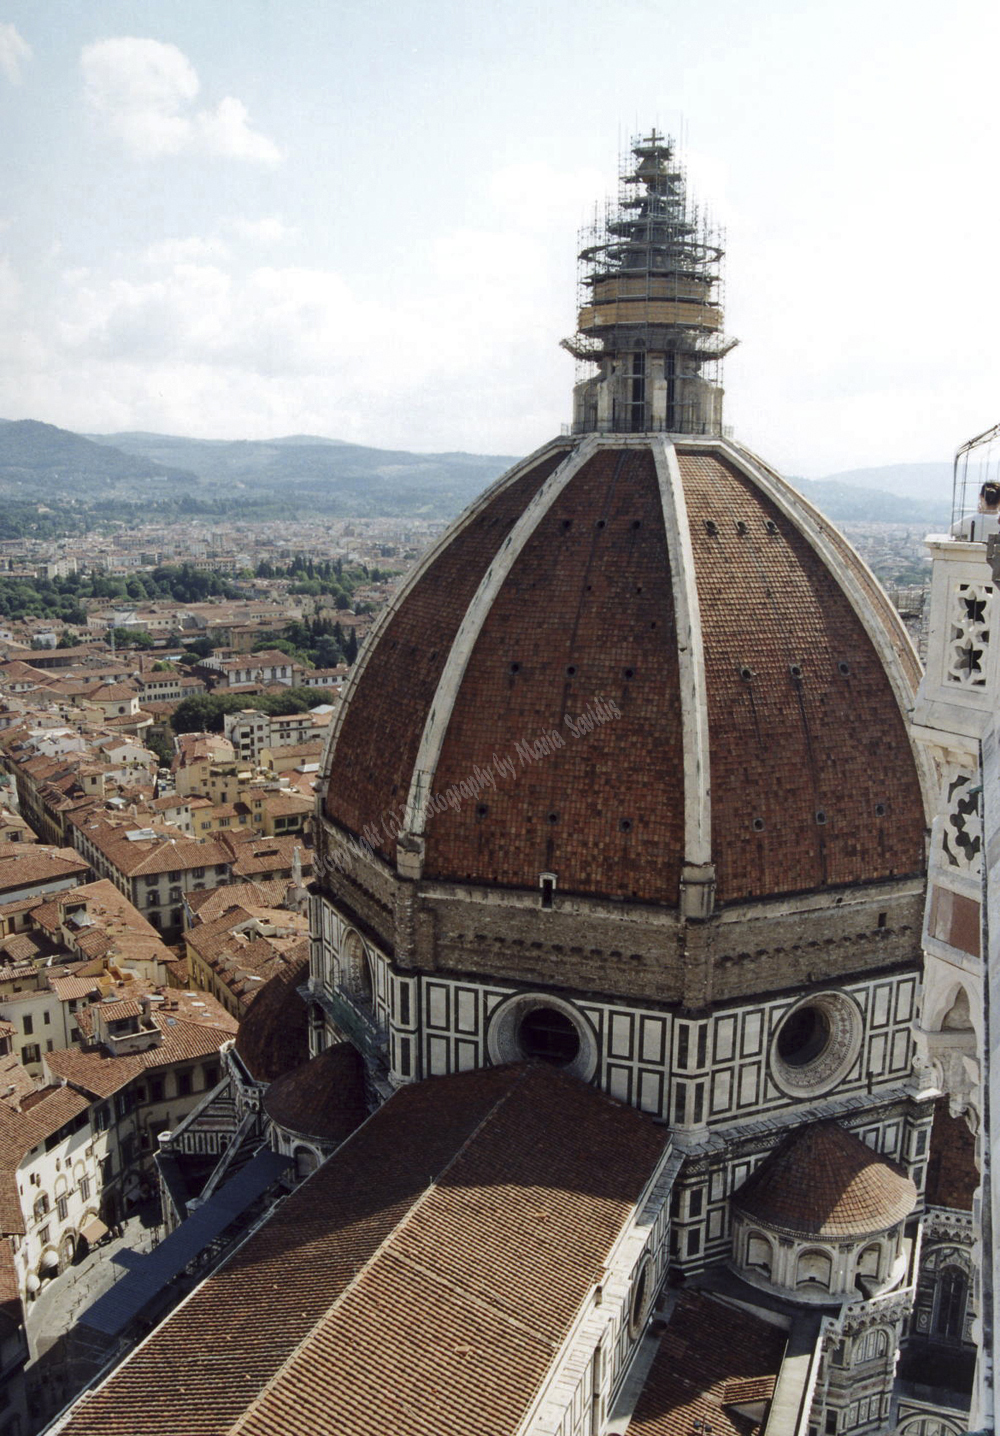 Florence, Tuscany Region, Italy